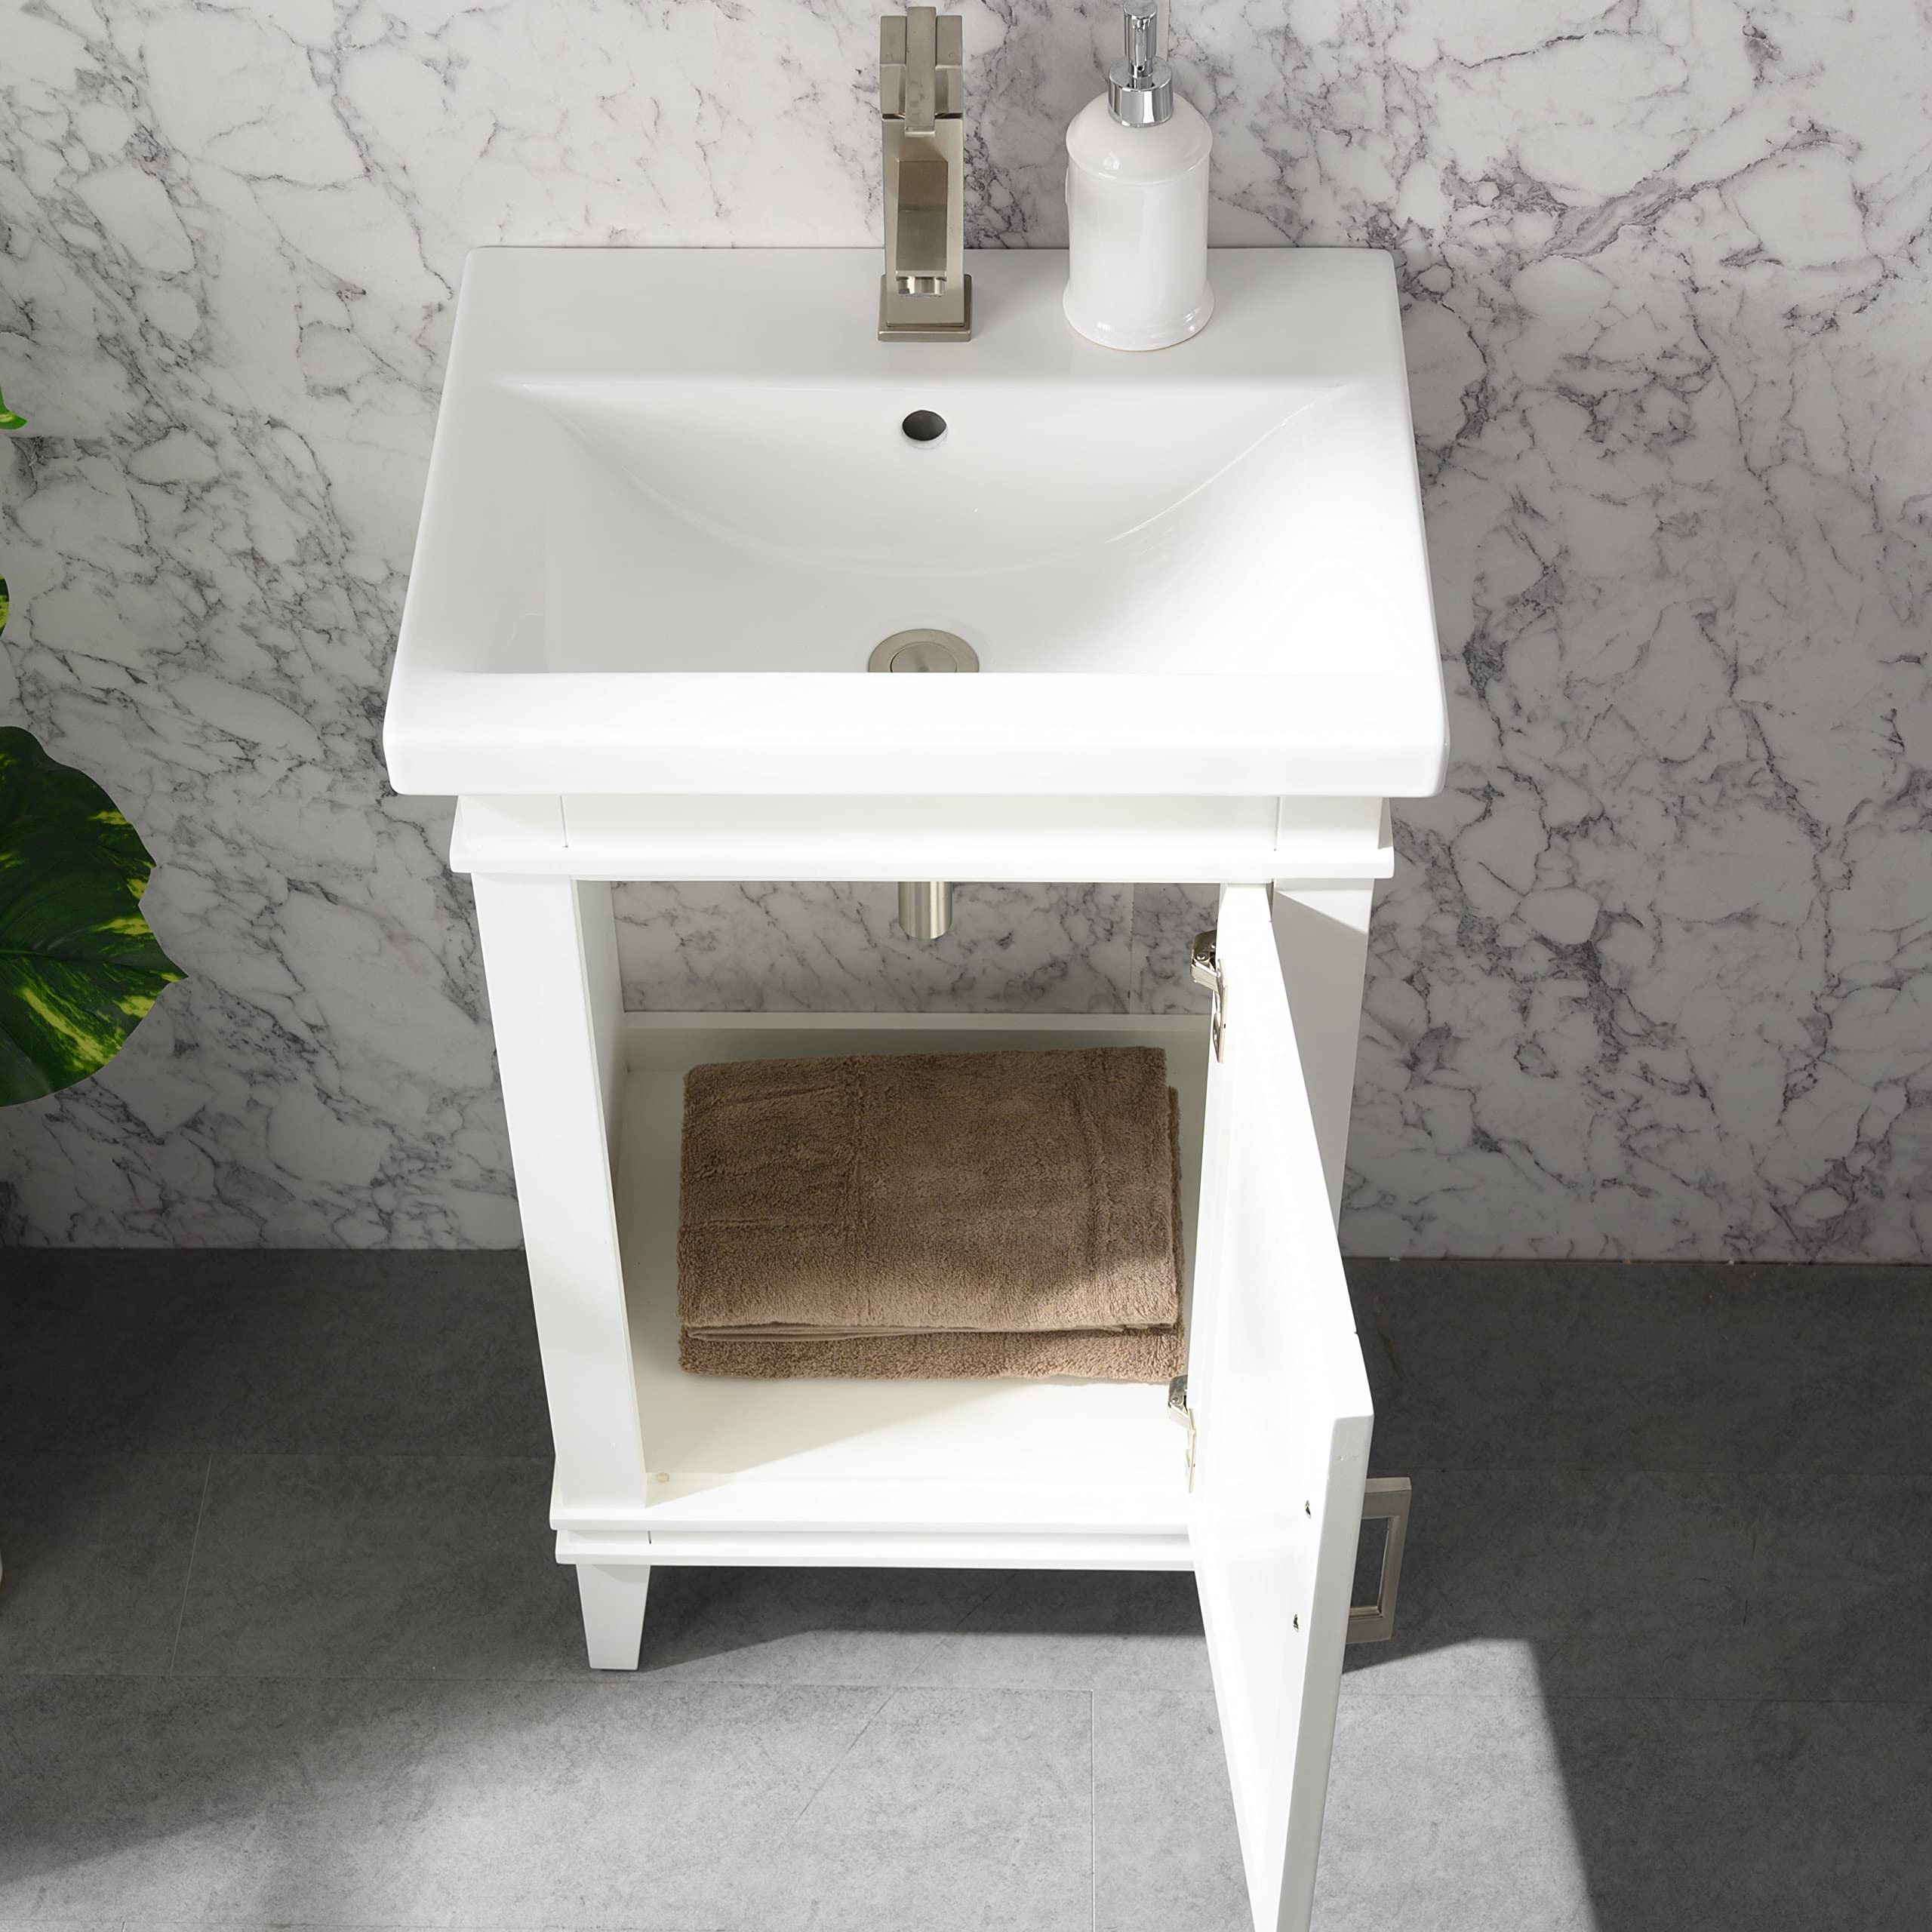 UrbanFurnishing.net Avery 20" Single Bathroom Vanity with Porcelain Top - White